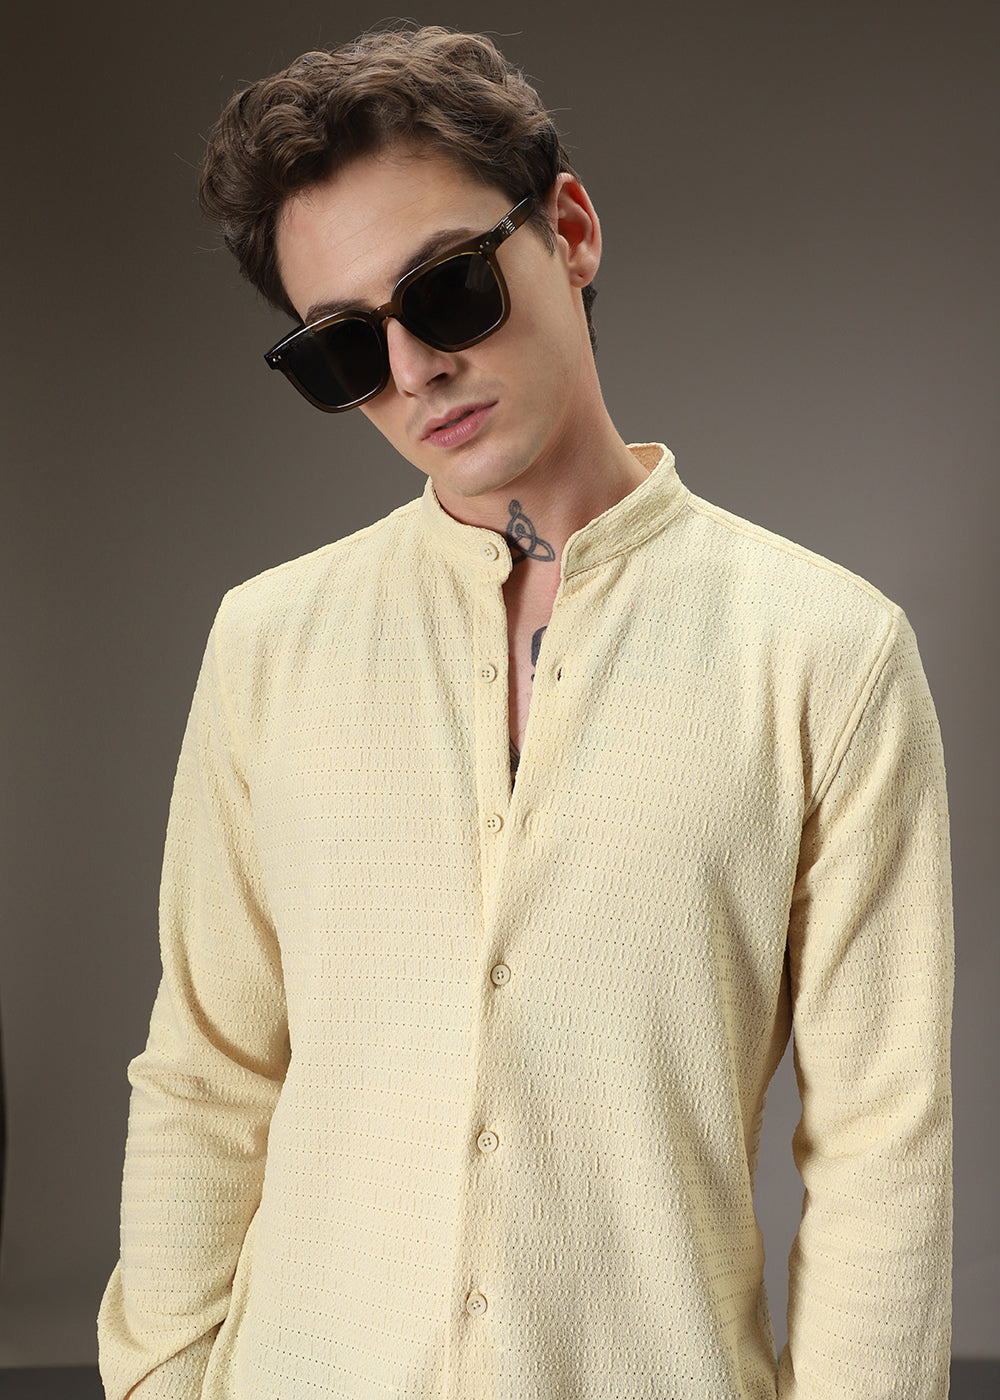 Pastel Yellow Knitted Crochet Shirt